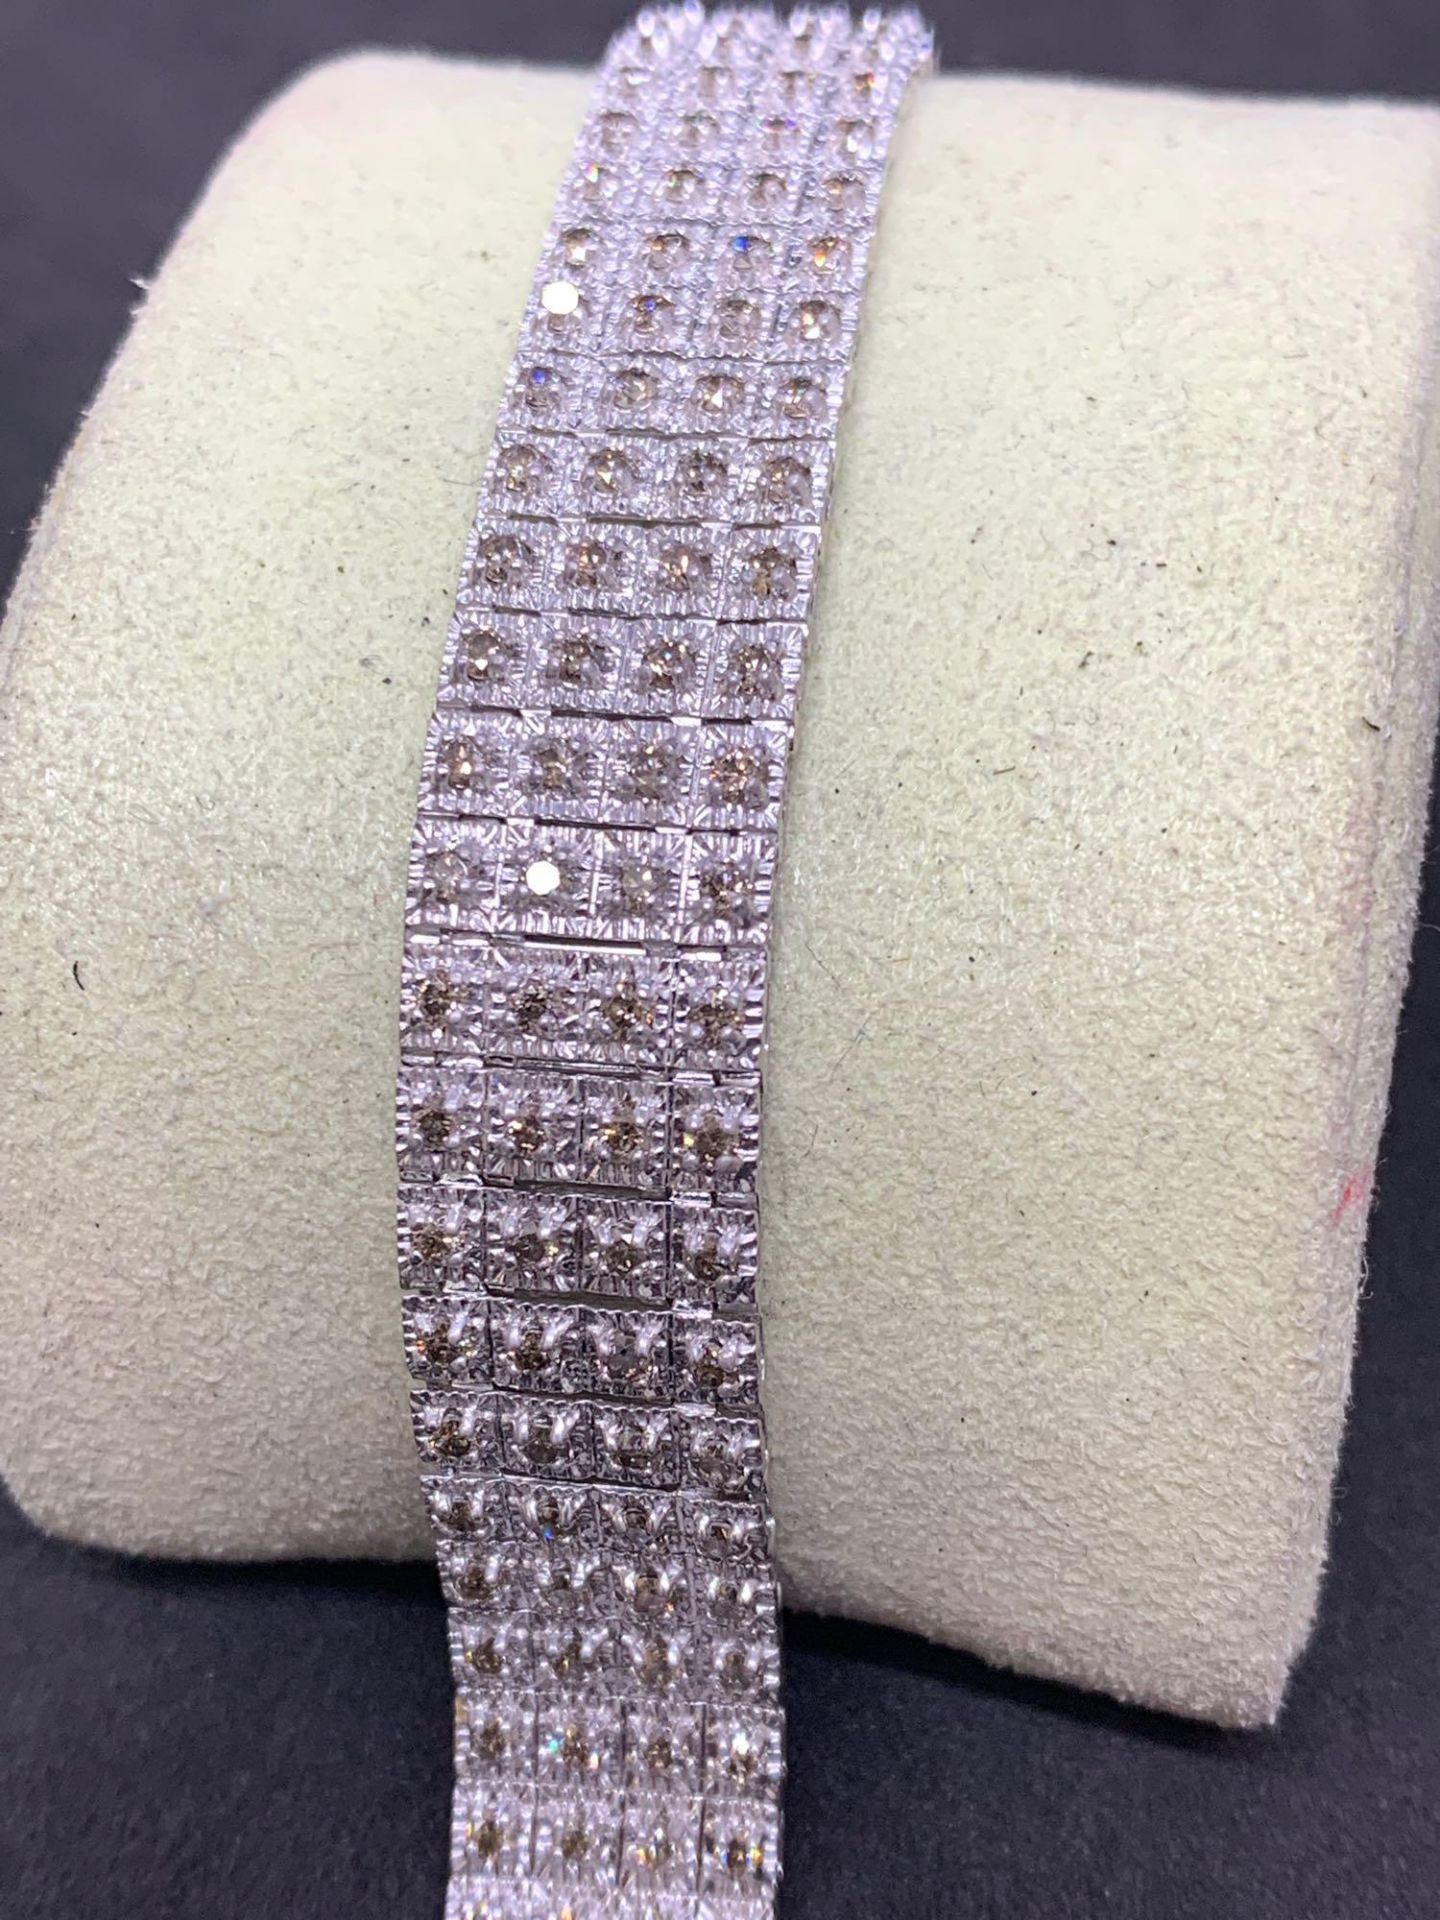 9 carat white gold diamond bracelet weighs 23 g - Image 2 of 5